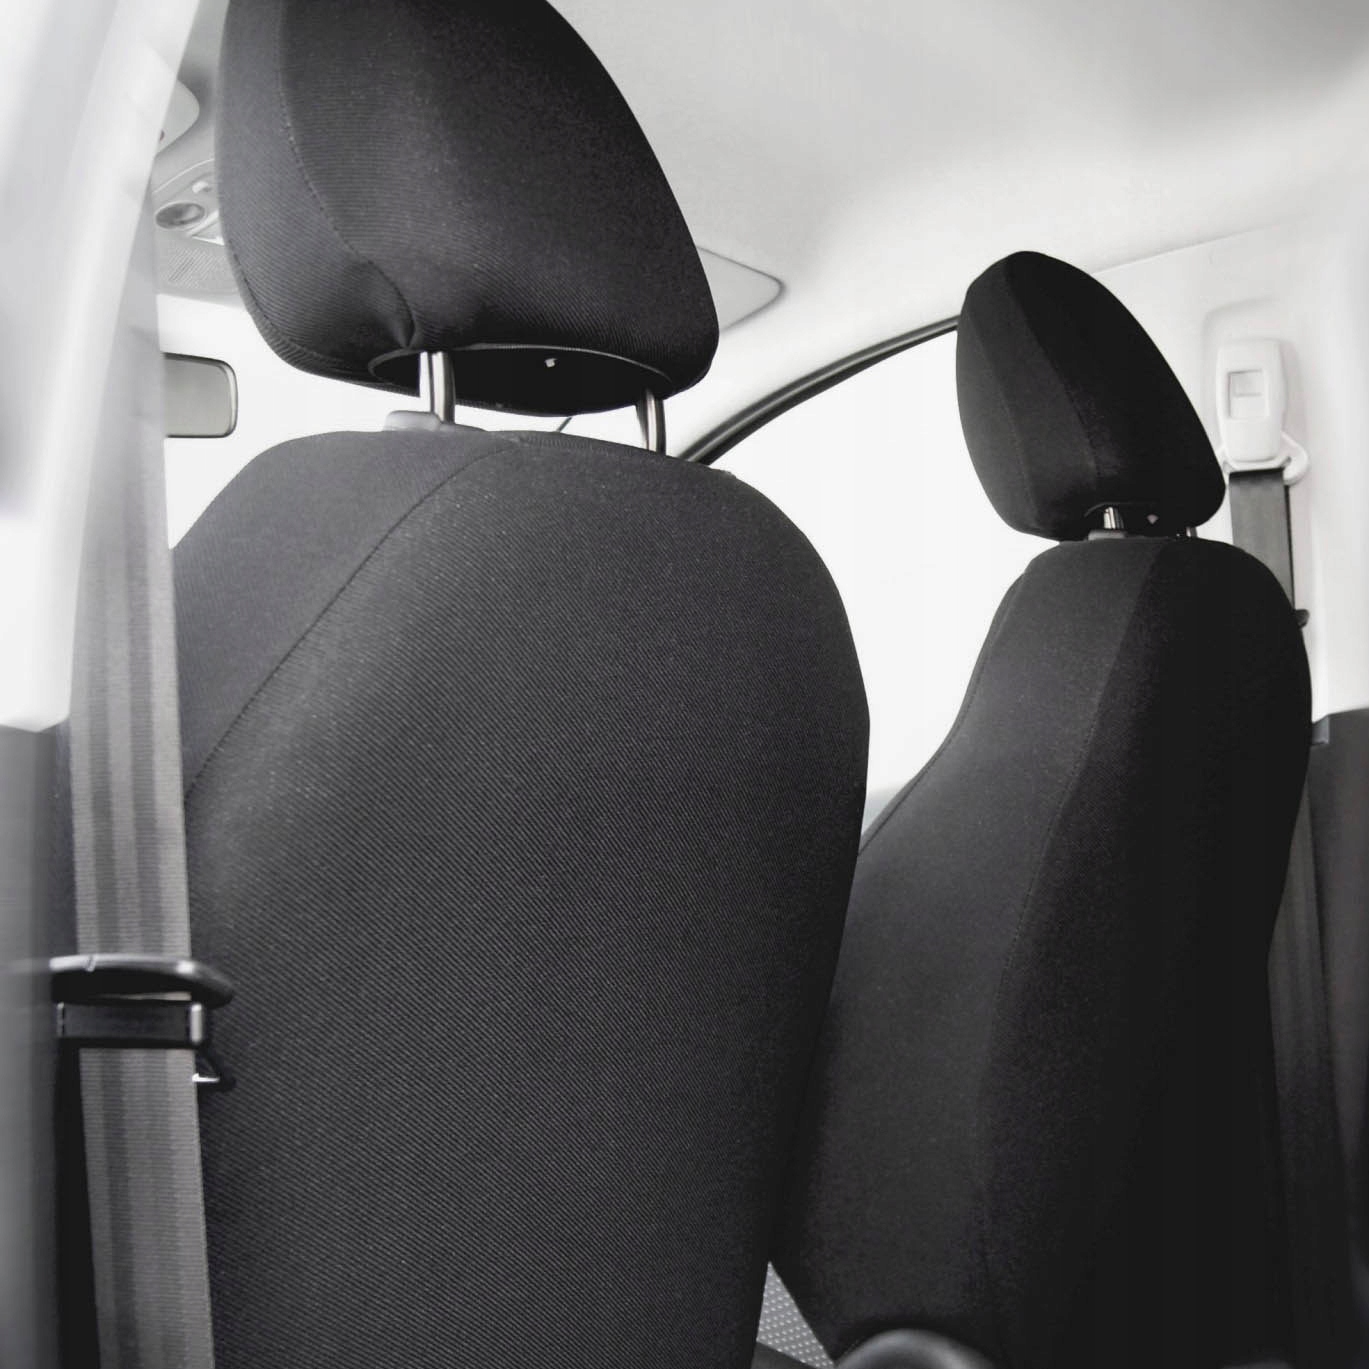 EXCLUSIVE sitzbezüge (öko-leder, alcantara) Ford Fiesta VI